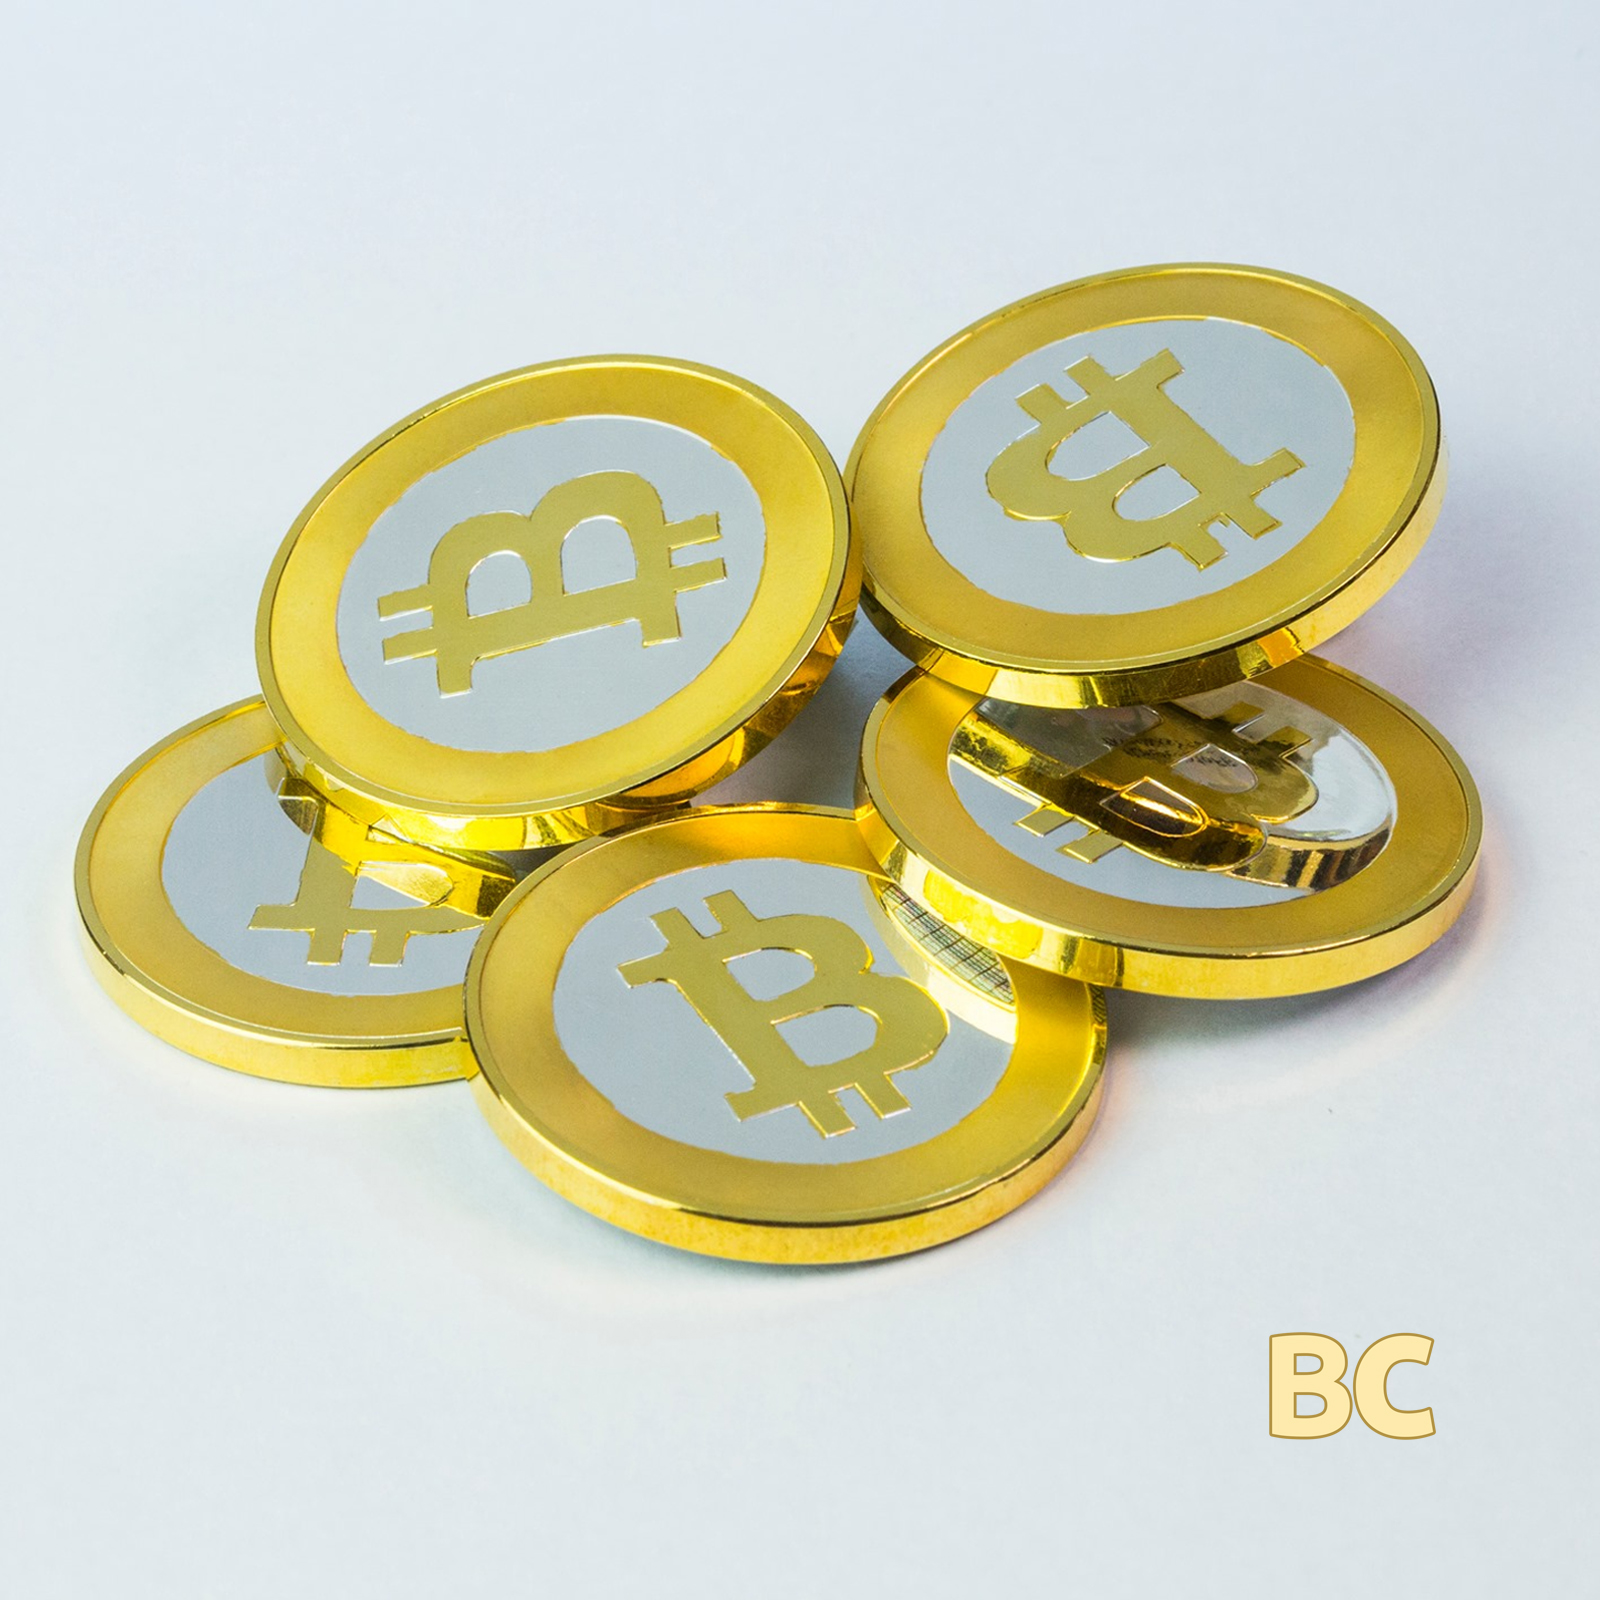 Physical Bitcoin